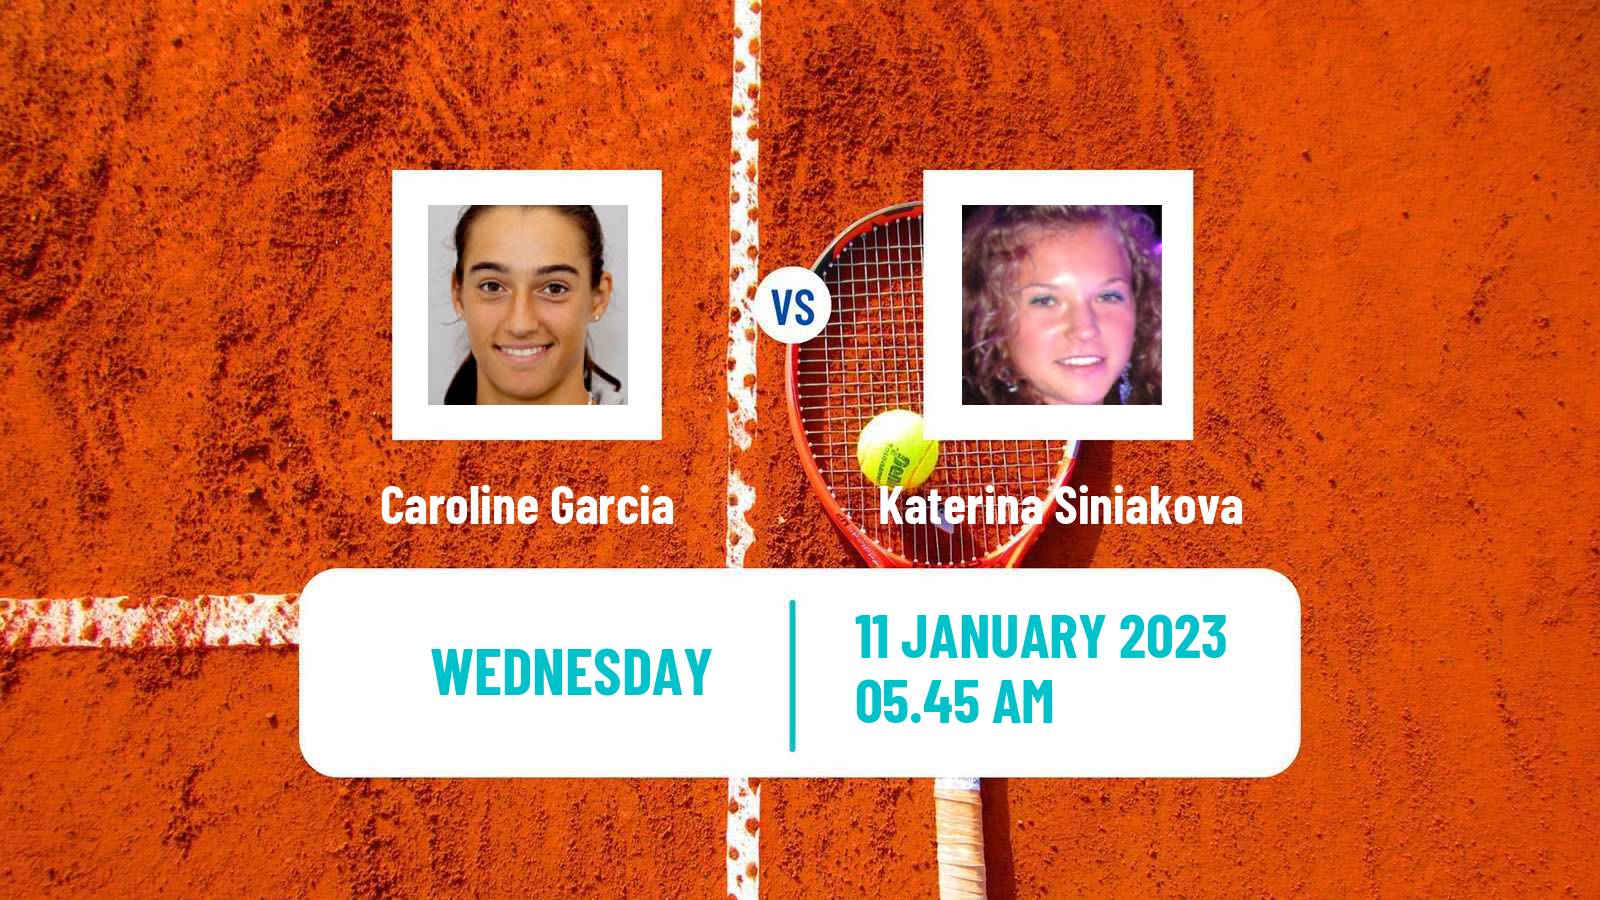 Tennis WTA Adelaide 2 Caroline Garcia - Katerina Siniakova